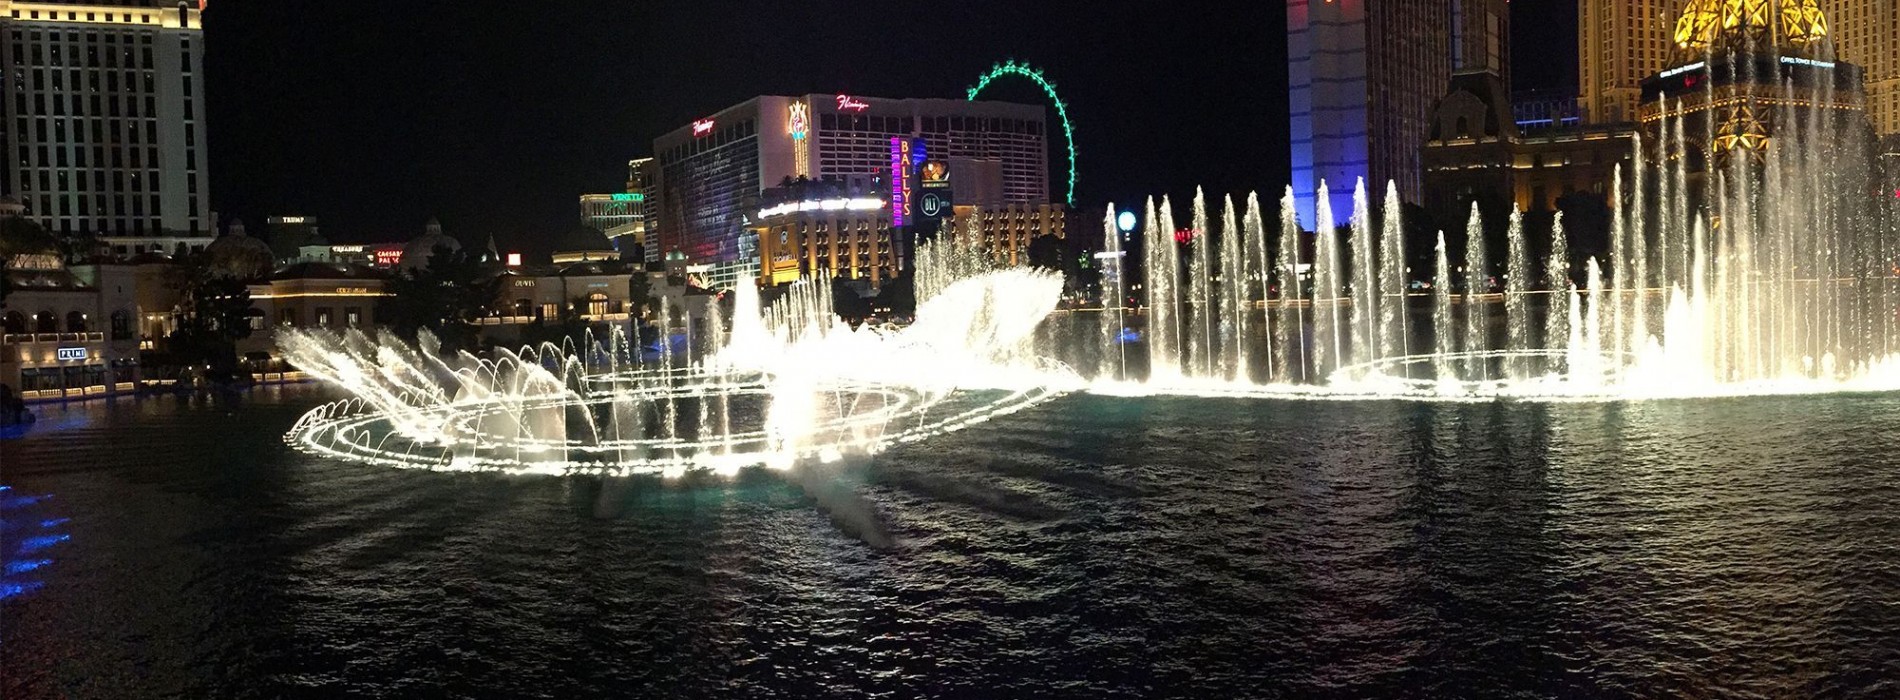 Las_Vegas_Lights.jpg